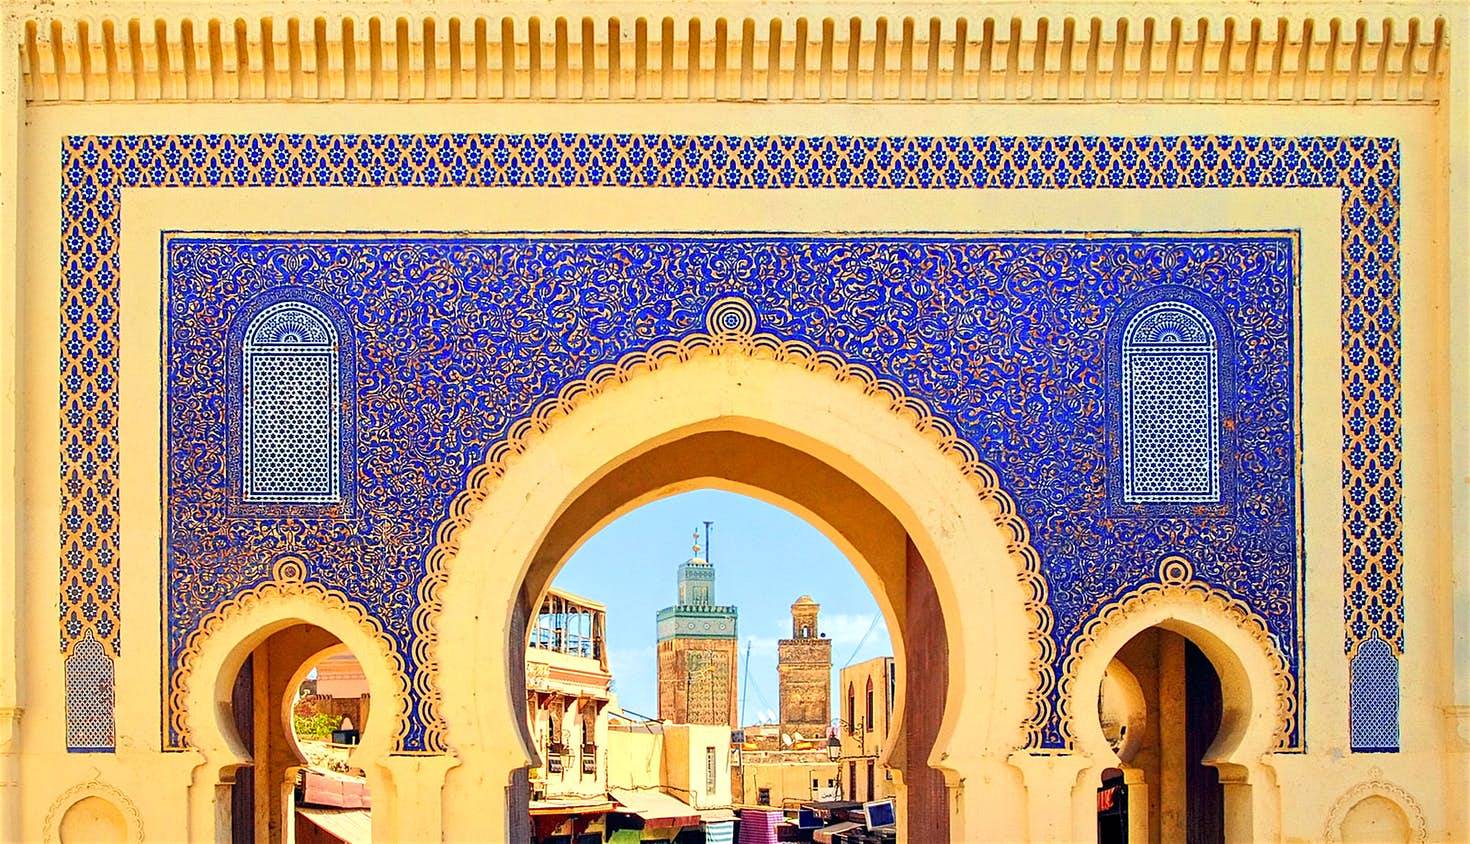 Morocco travel agency fez,Travel Agency Morocco